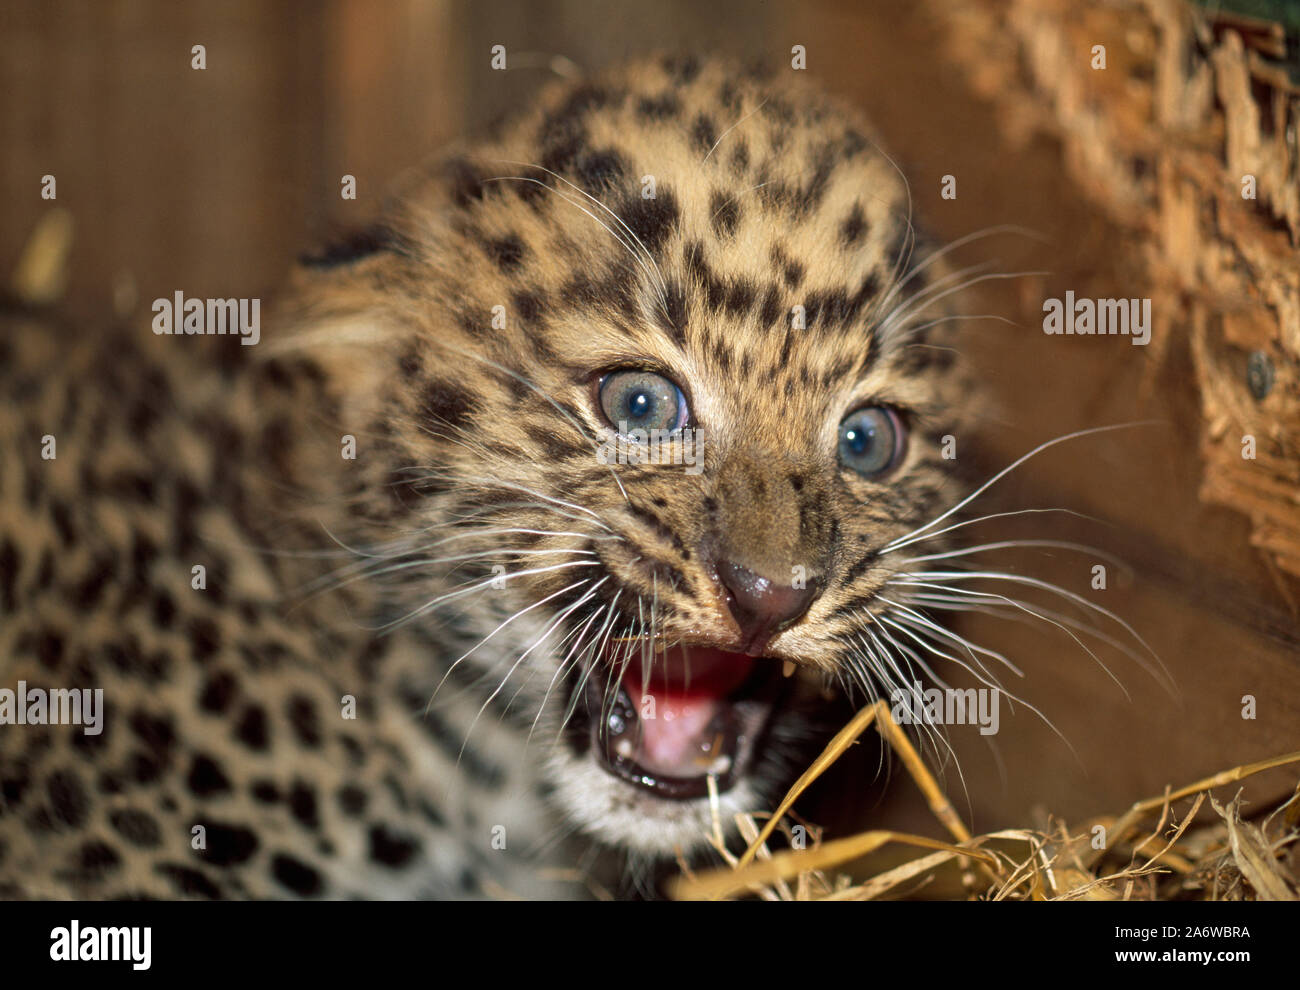 AMUR LEOPARD Cub, (Panthera pardus orientalis). Kopf Detail kritisch gefährdeten Arten. Stockfoto